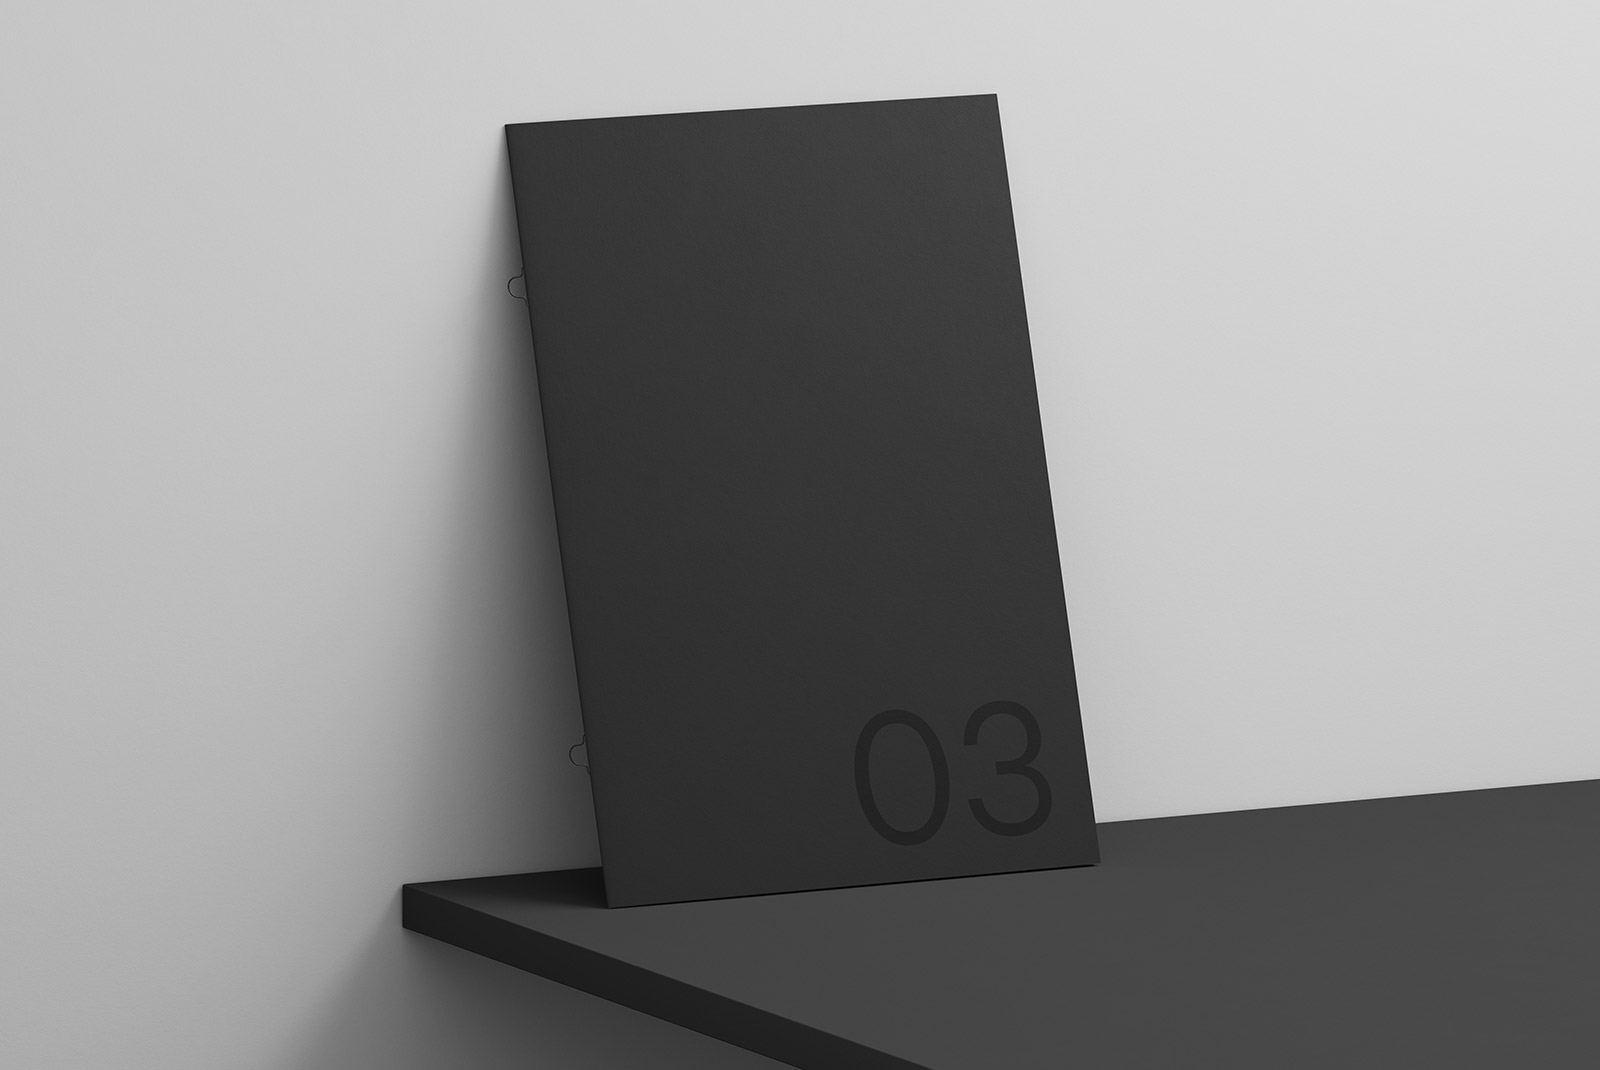 Minimalistic black folder mockup leaning on gray wall, with subtle shadow effect, ideal for sleek presentation designs, branding mockups.